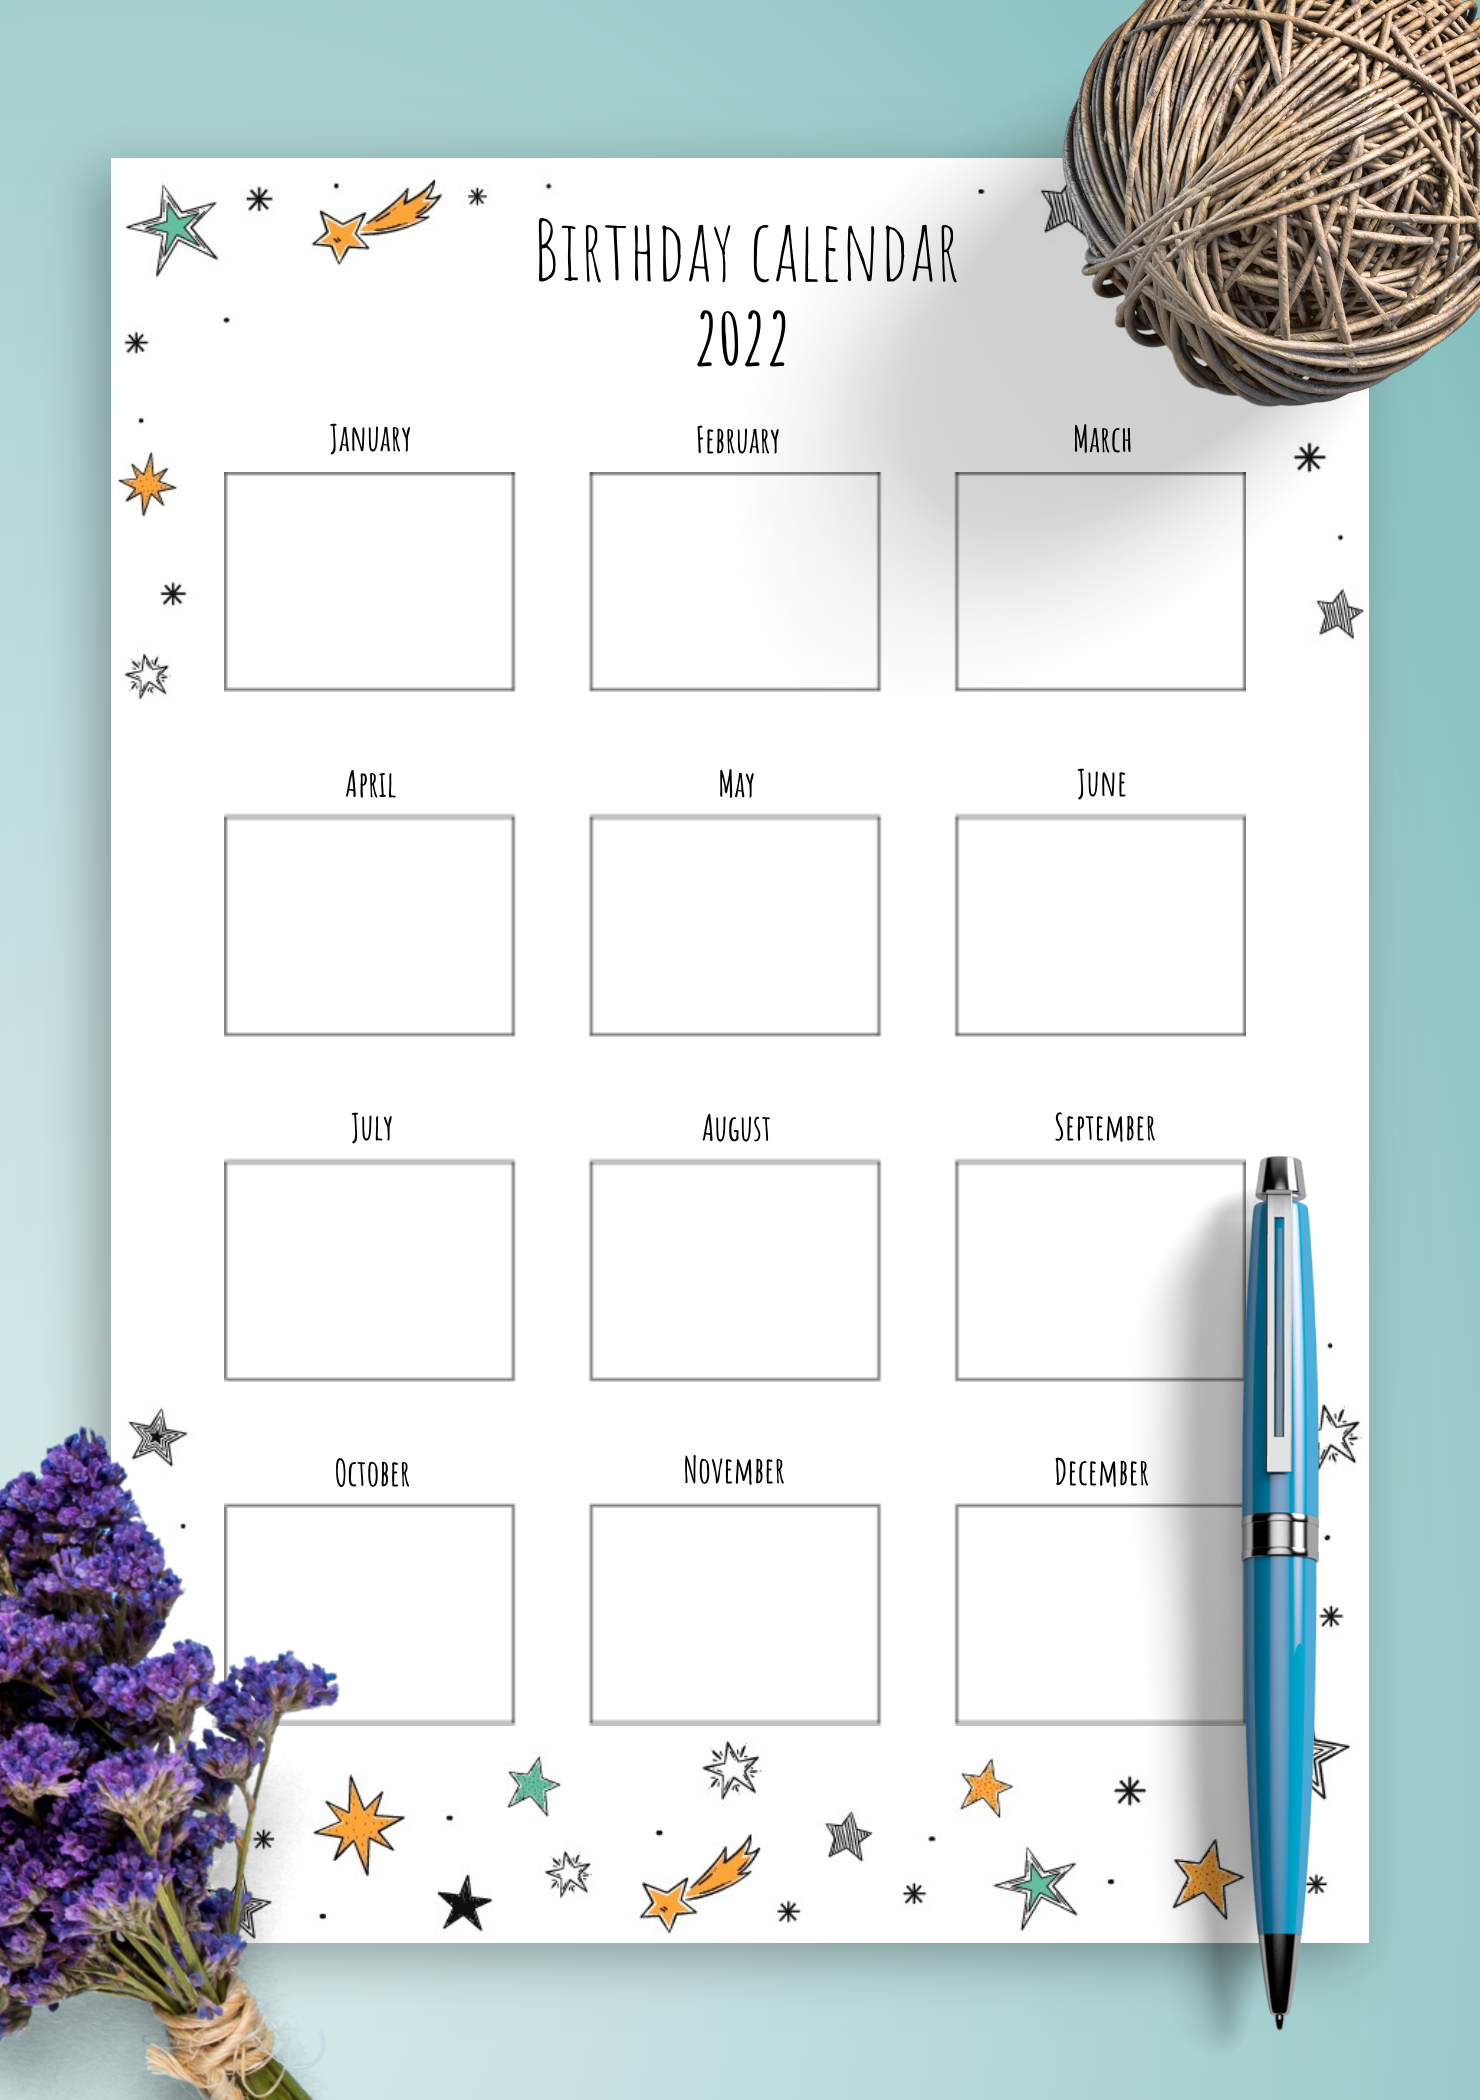 editable birthday calendar template free 40